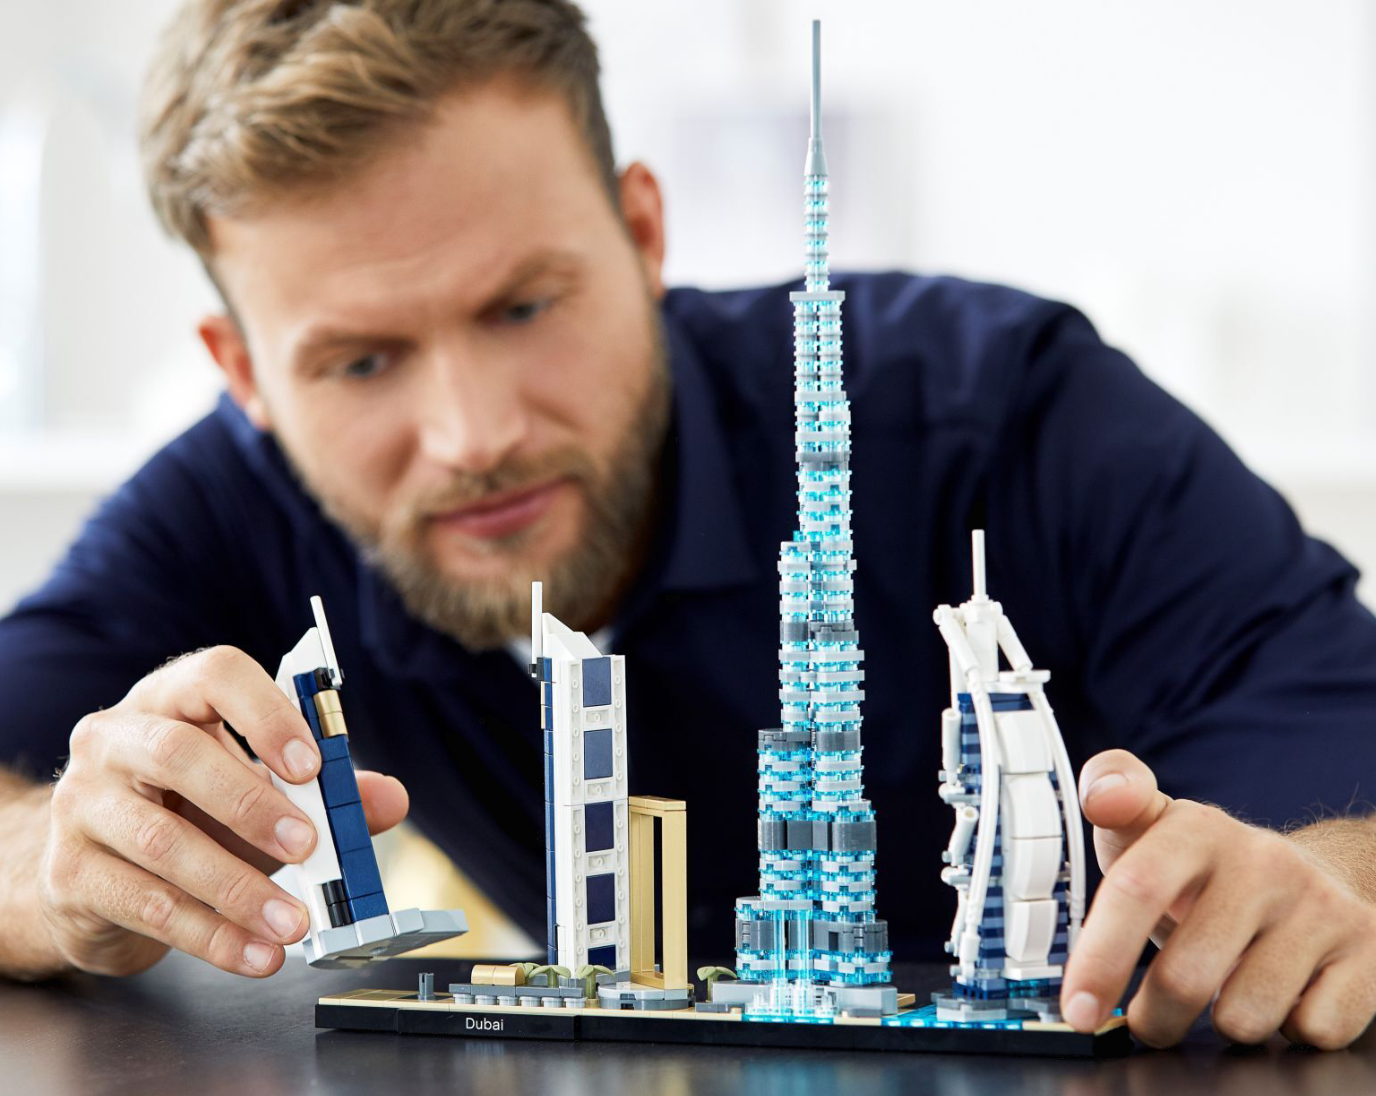 Adult building Dubai skyscrapers with LEGO bricks